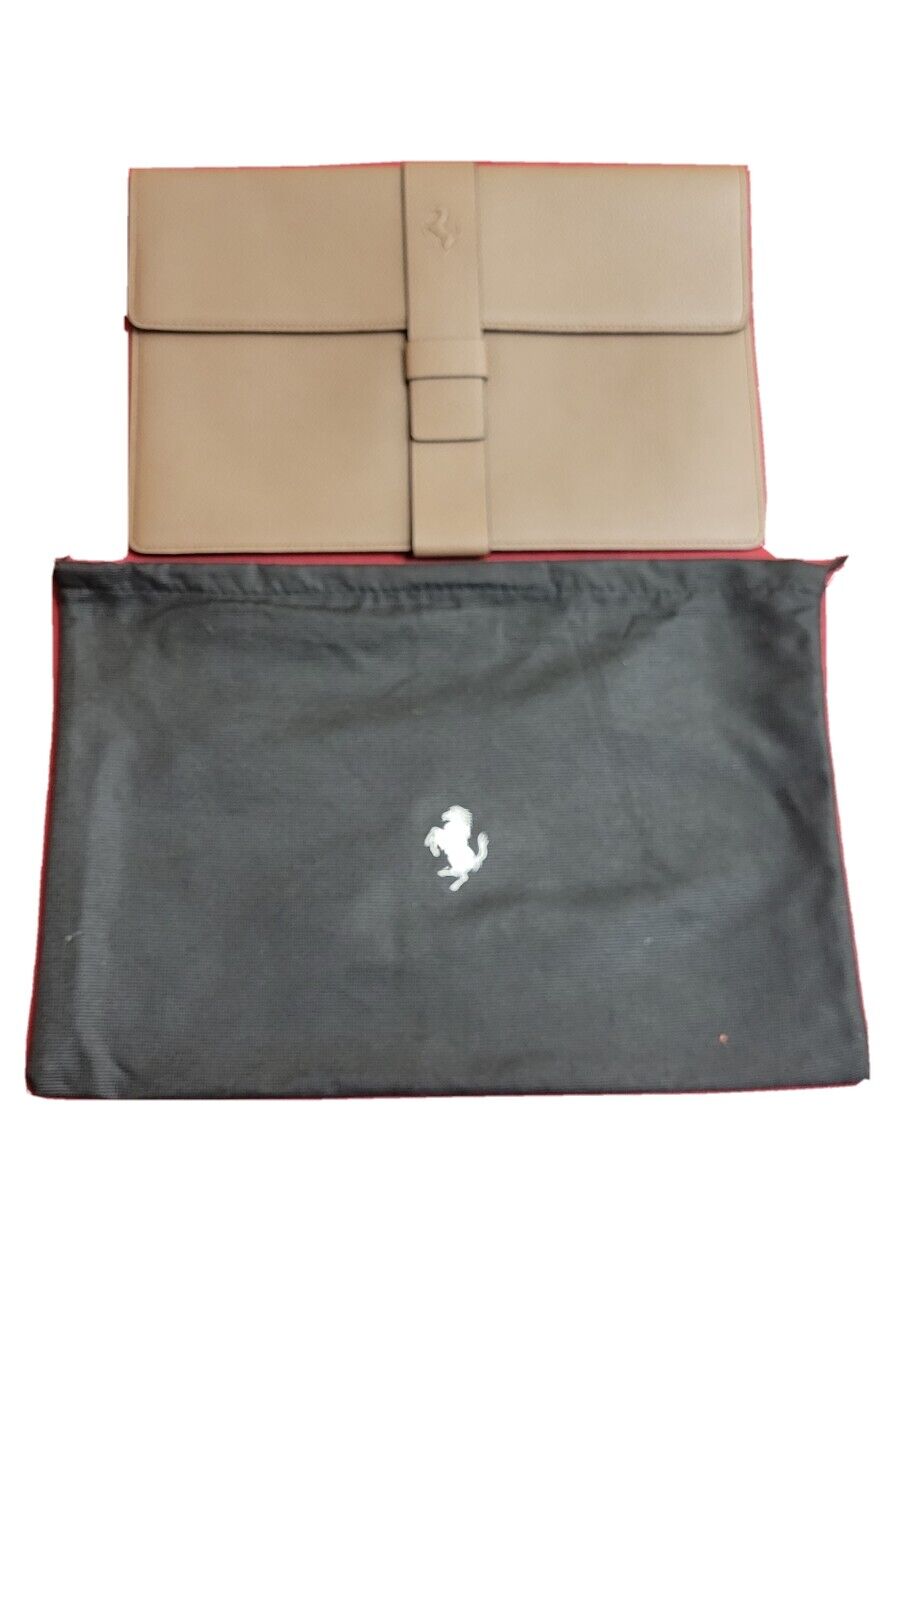 Ferrari Brown Leather Carrying case / Attache Italian iPad case